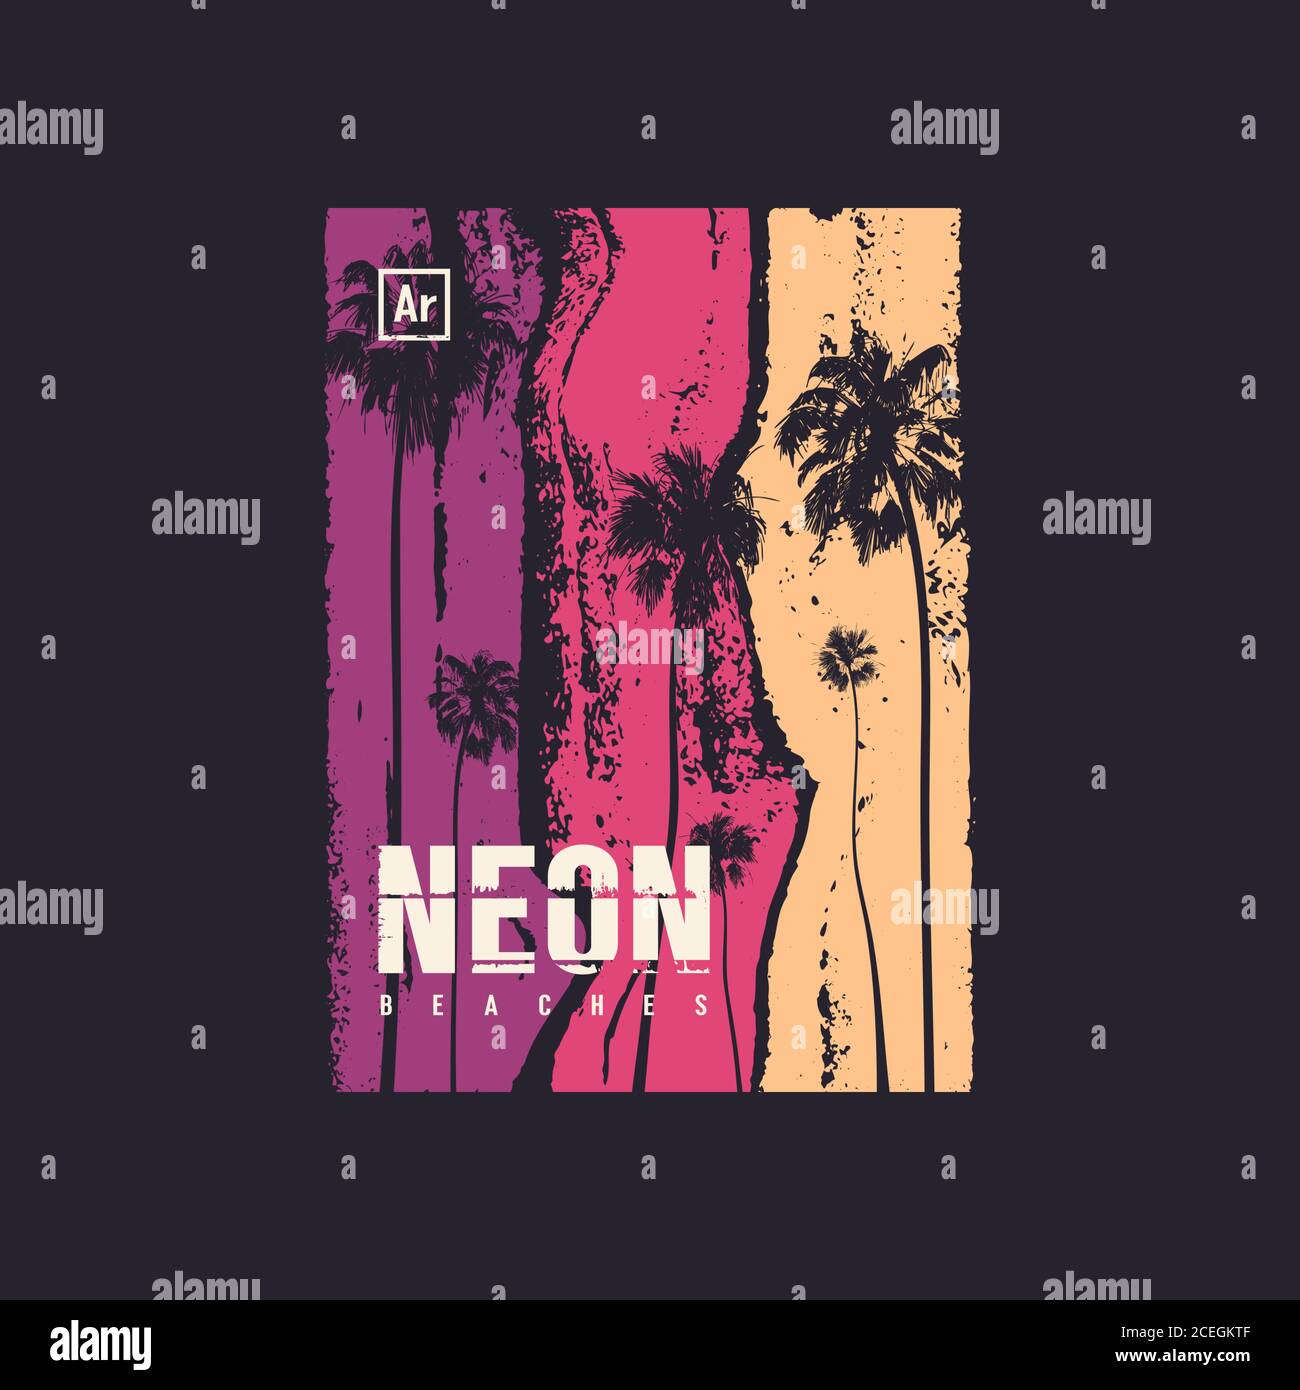 Neon beaches t-shirt vector design, poster, print, template Stock Vector